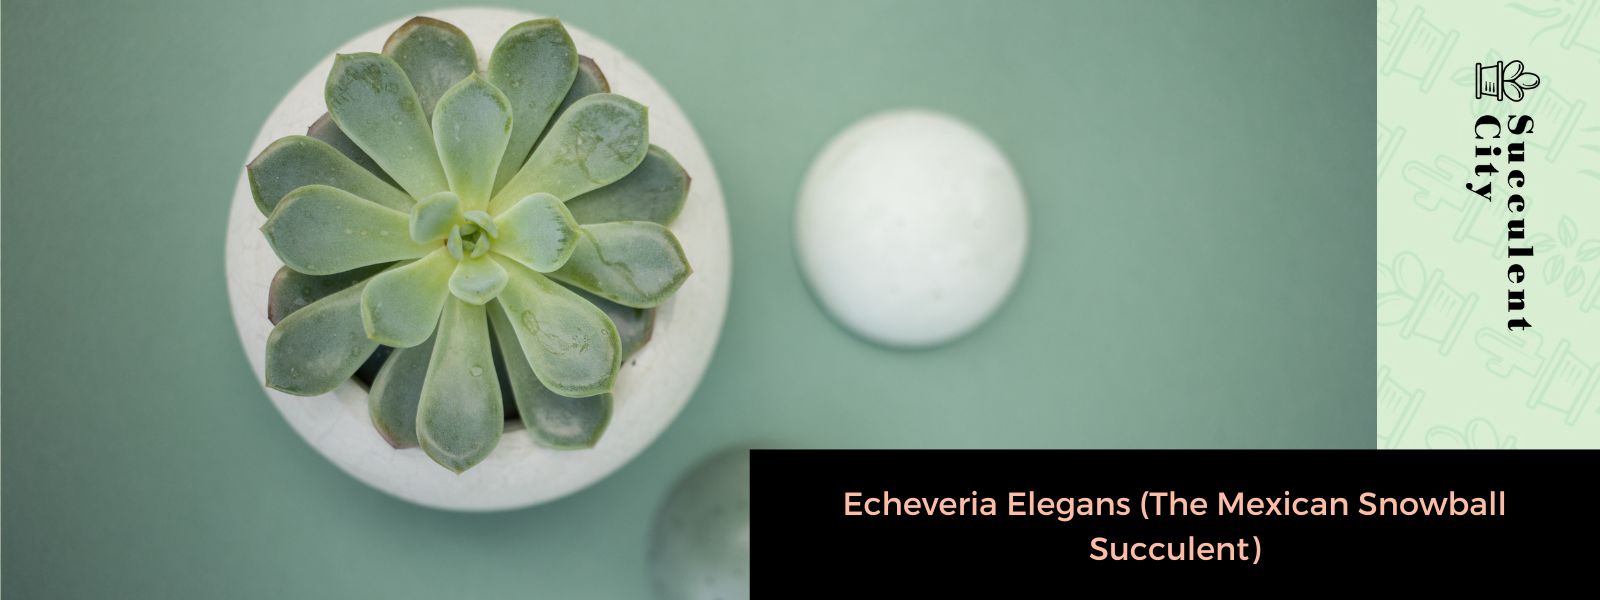 Echeveria Elegans (La bola de nieve mexicana)